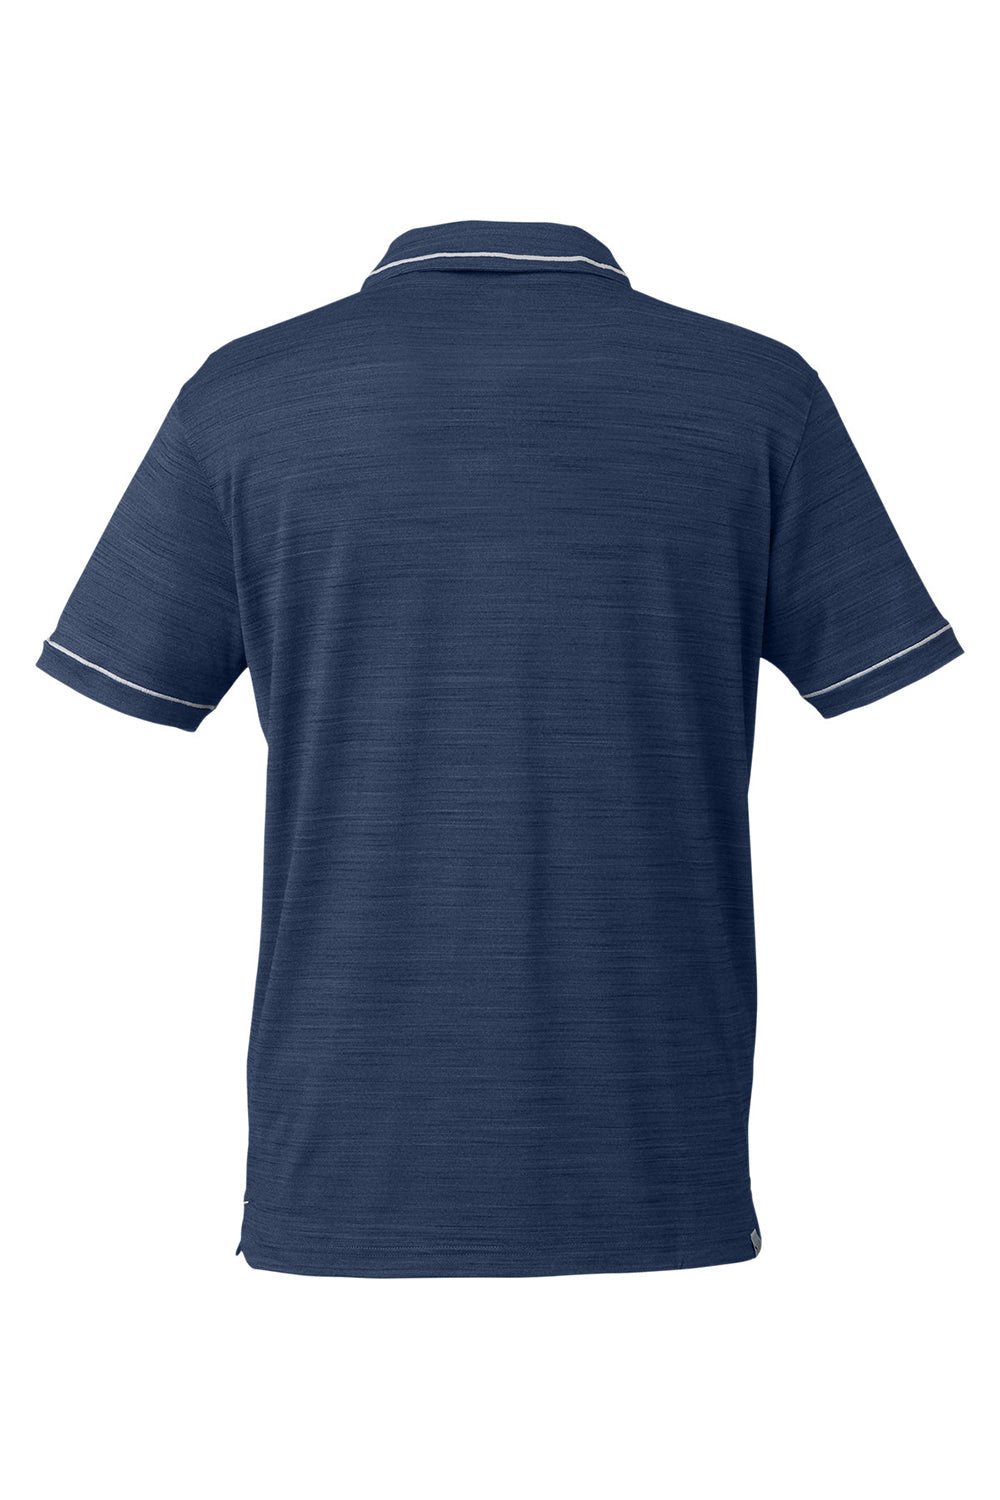 Puma 599117 Mens Cloudspun Monarch Short Sleeve Polo Shirt Heather Navy Blue/High Rise Grey Flat Back